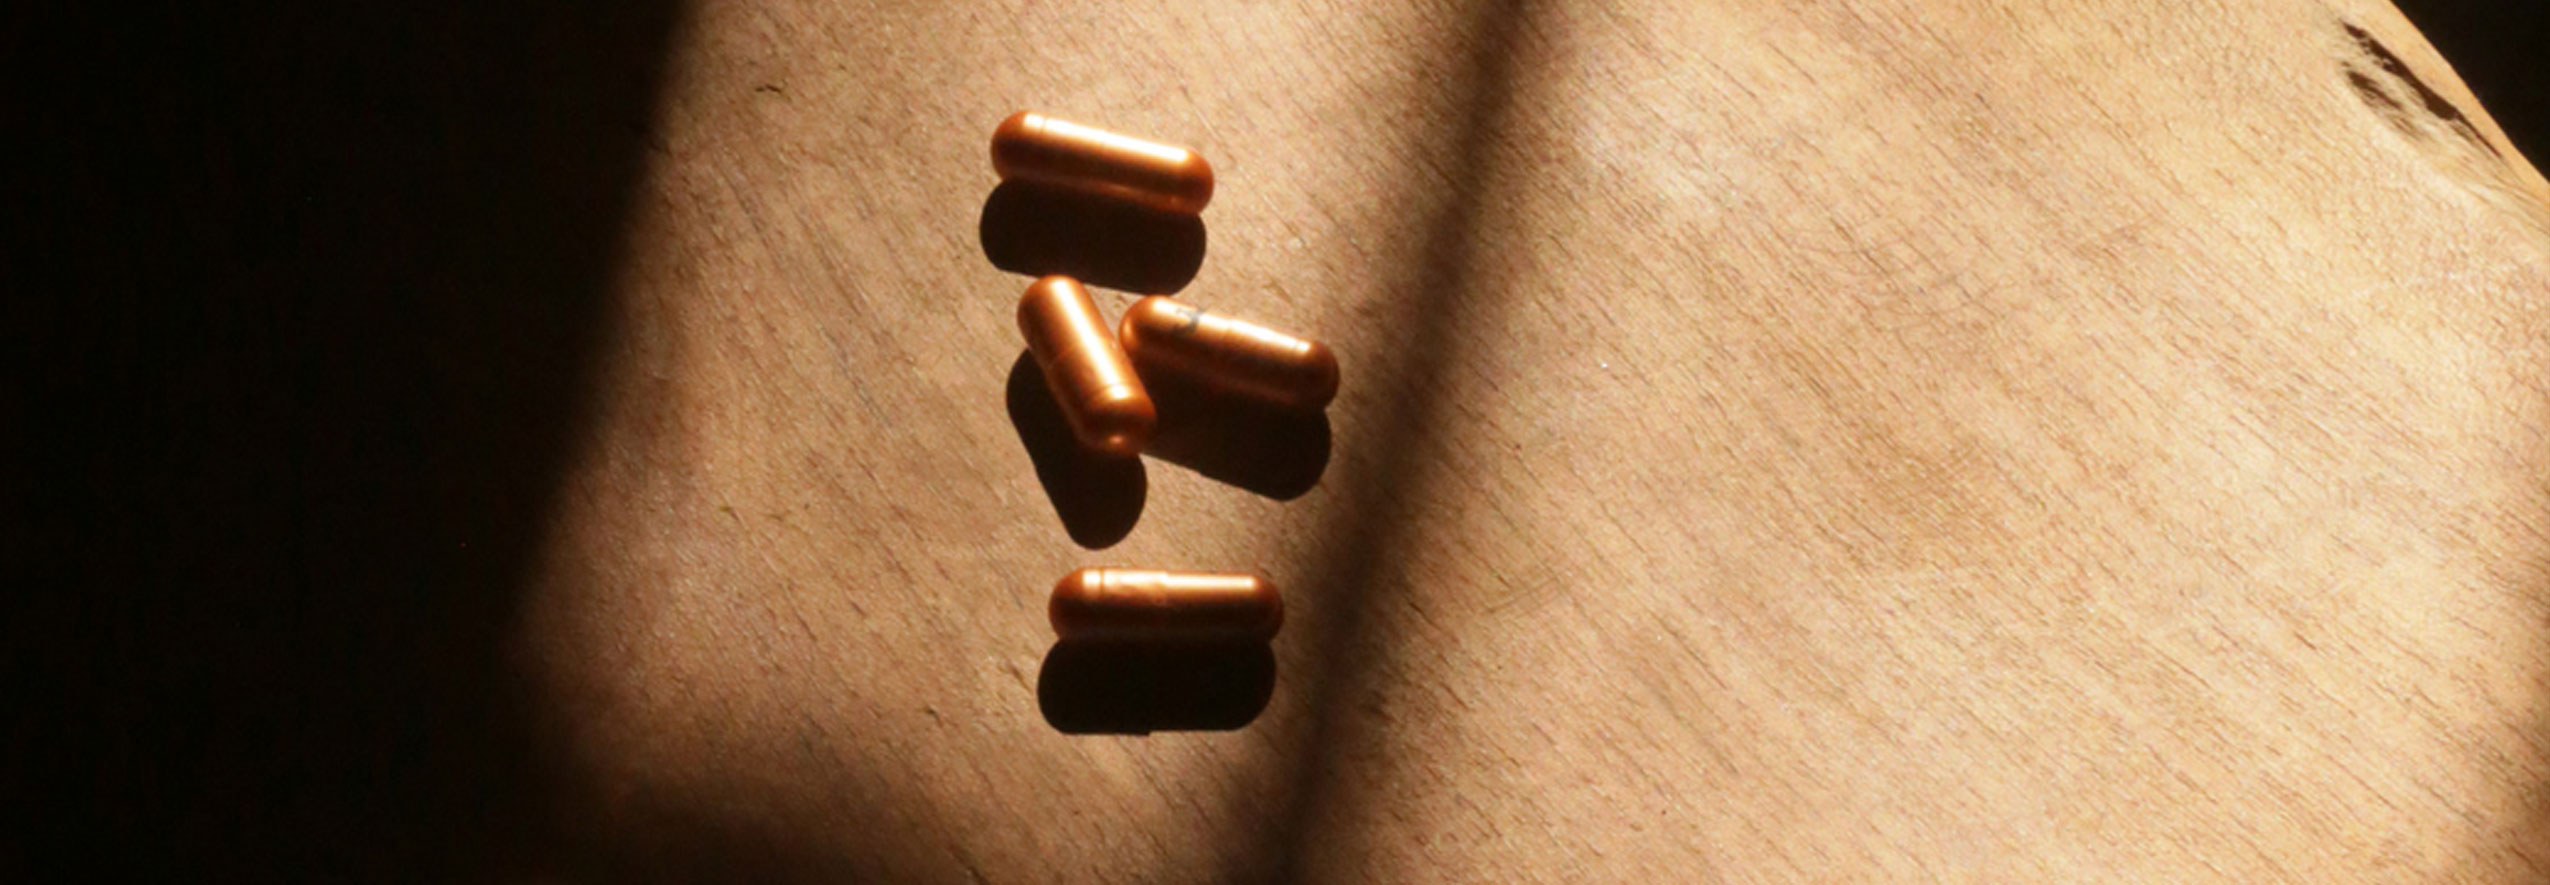 Pills on table